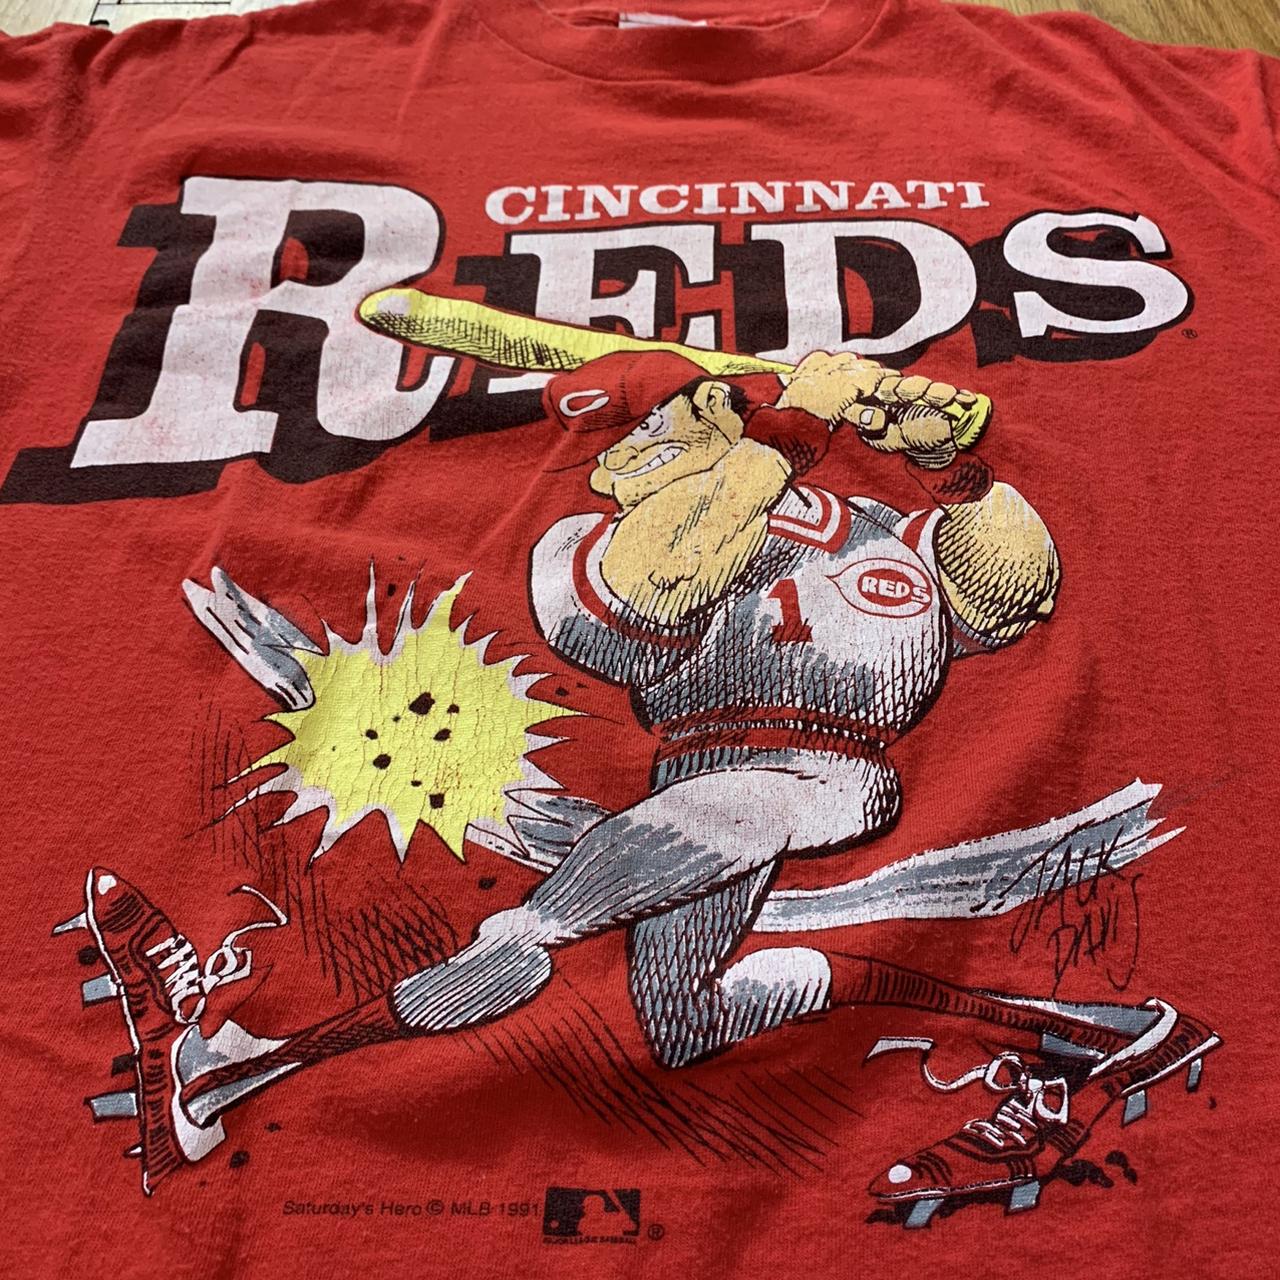 Vintage MLB Looney Tunes Cincinnati Reds Shirt, Cincinnati Reds